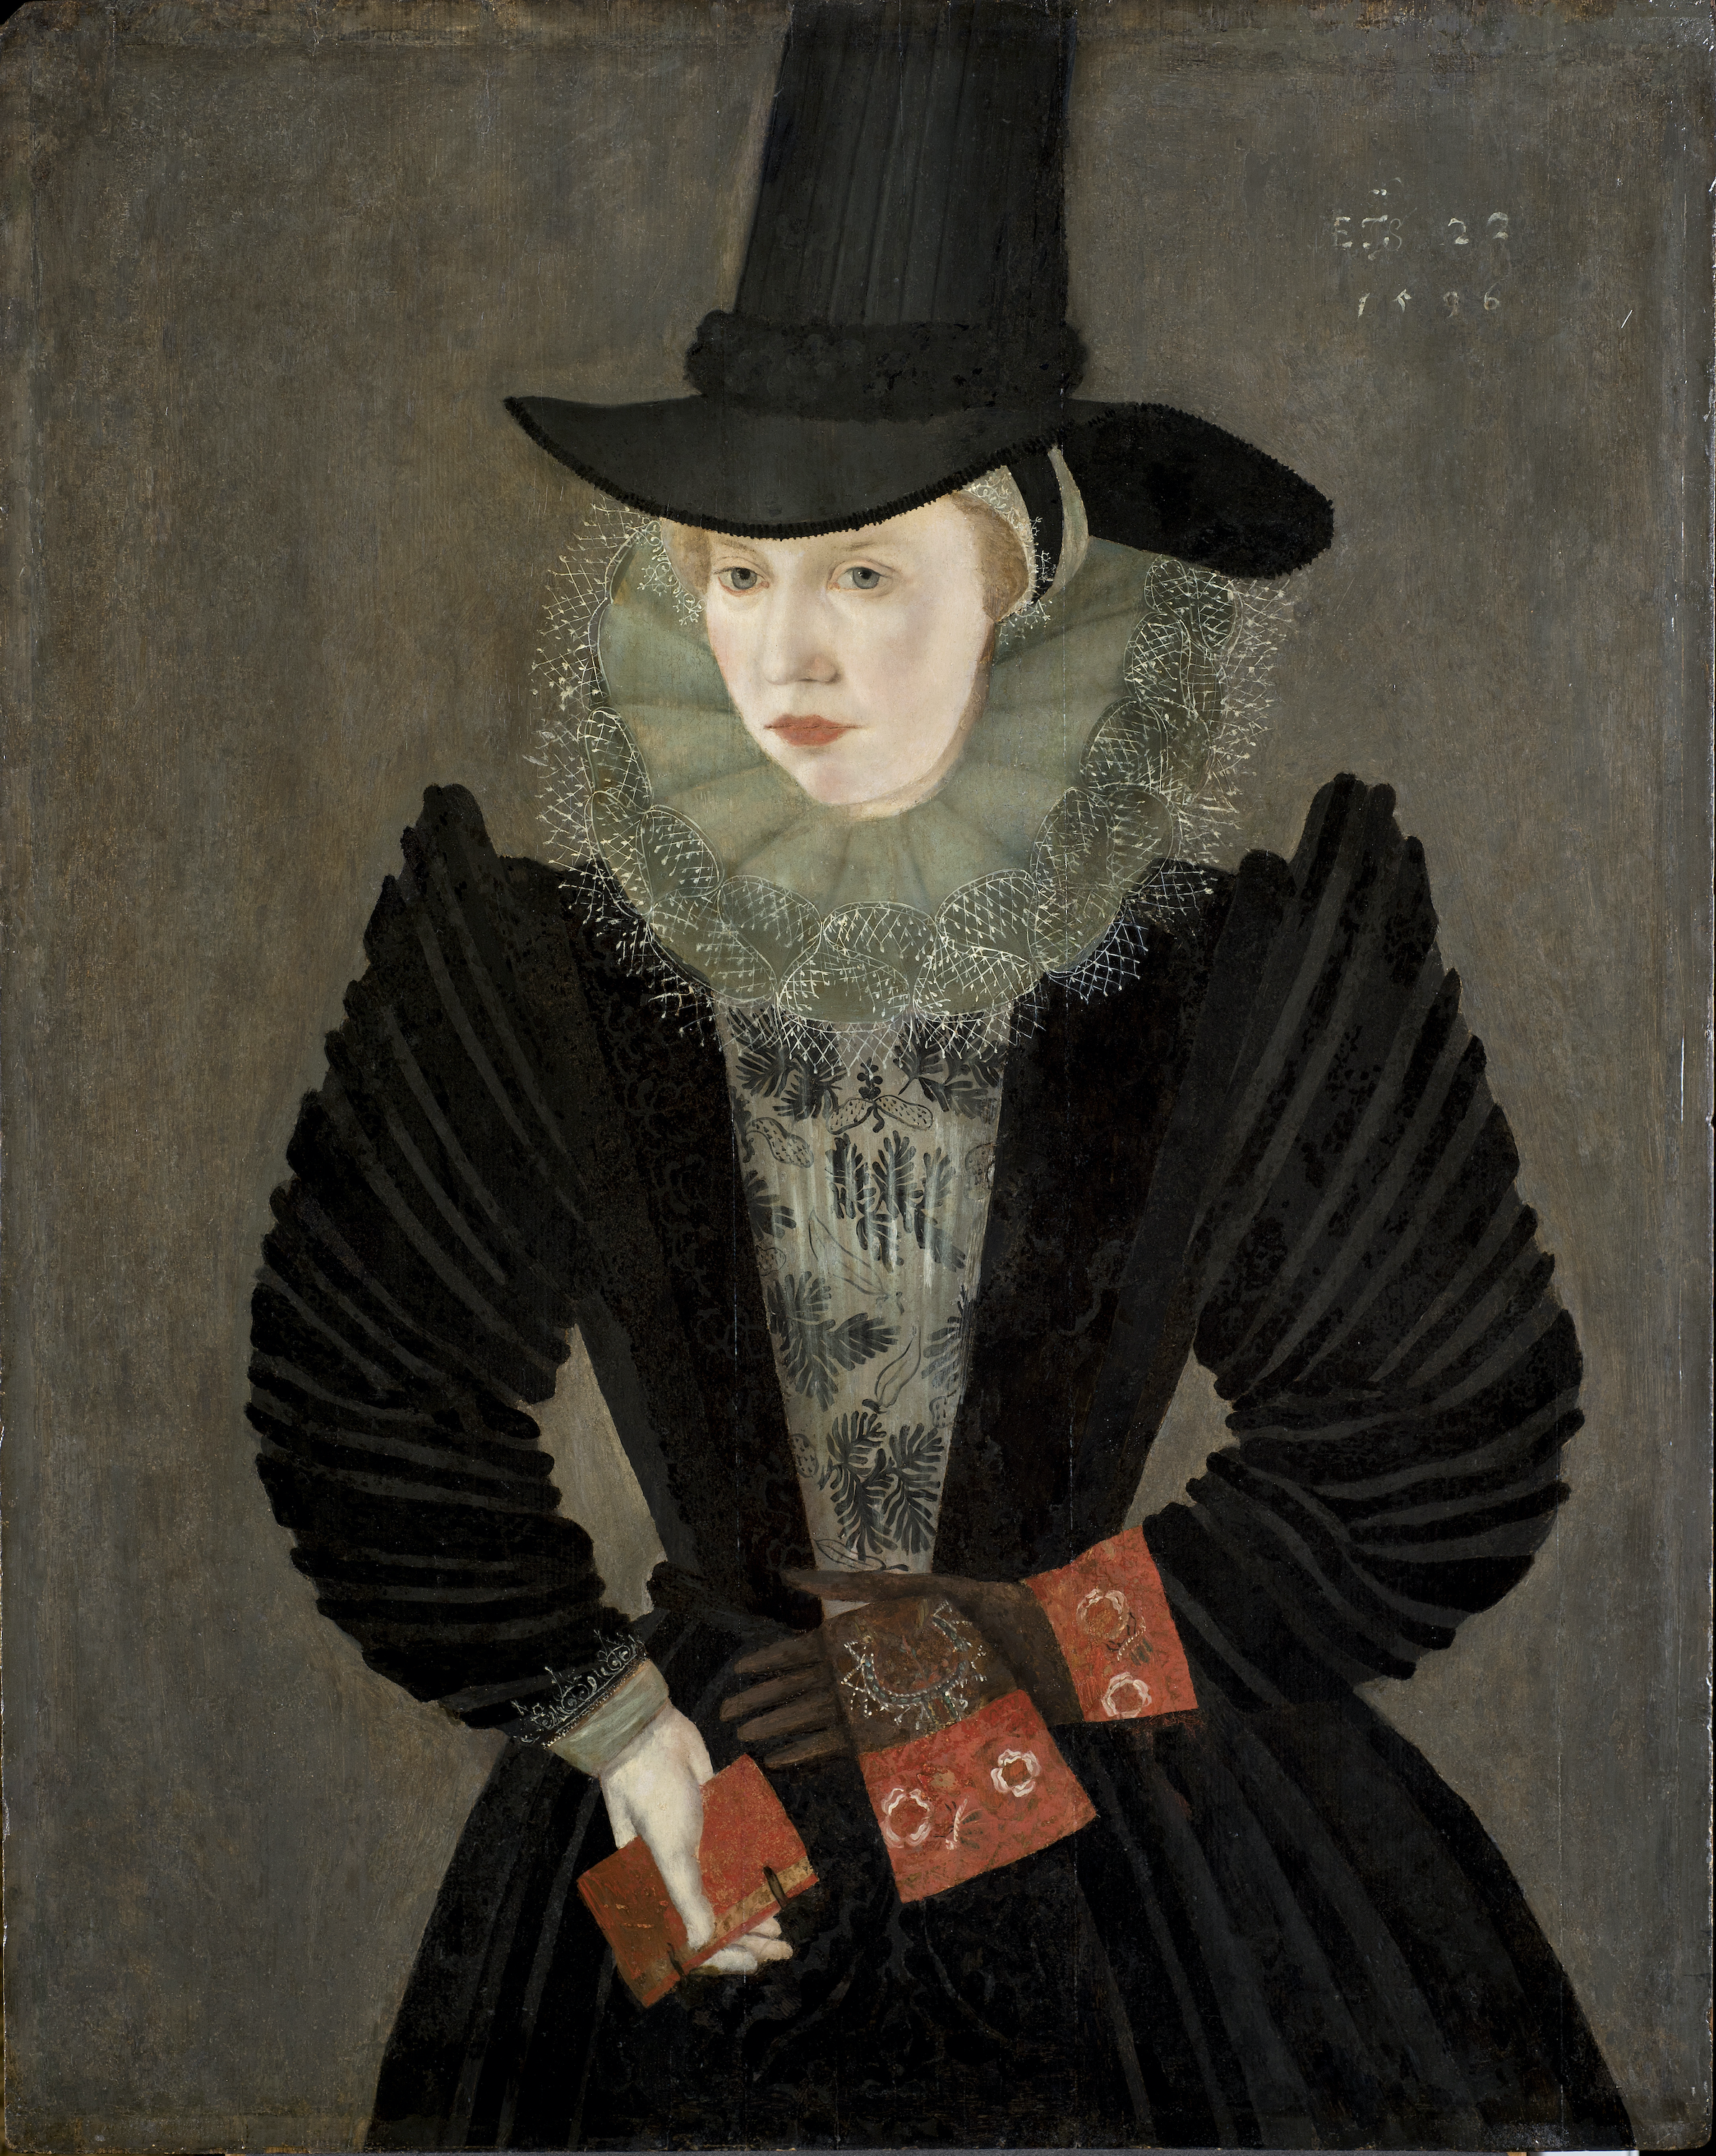 Joan Alleyn by Artista anónimo  - 1596 - 79,1 x 63,2 cm Dulwich Picture Gallery